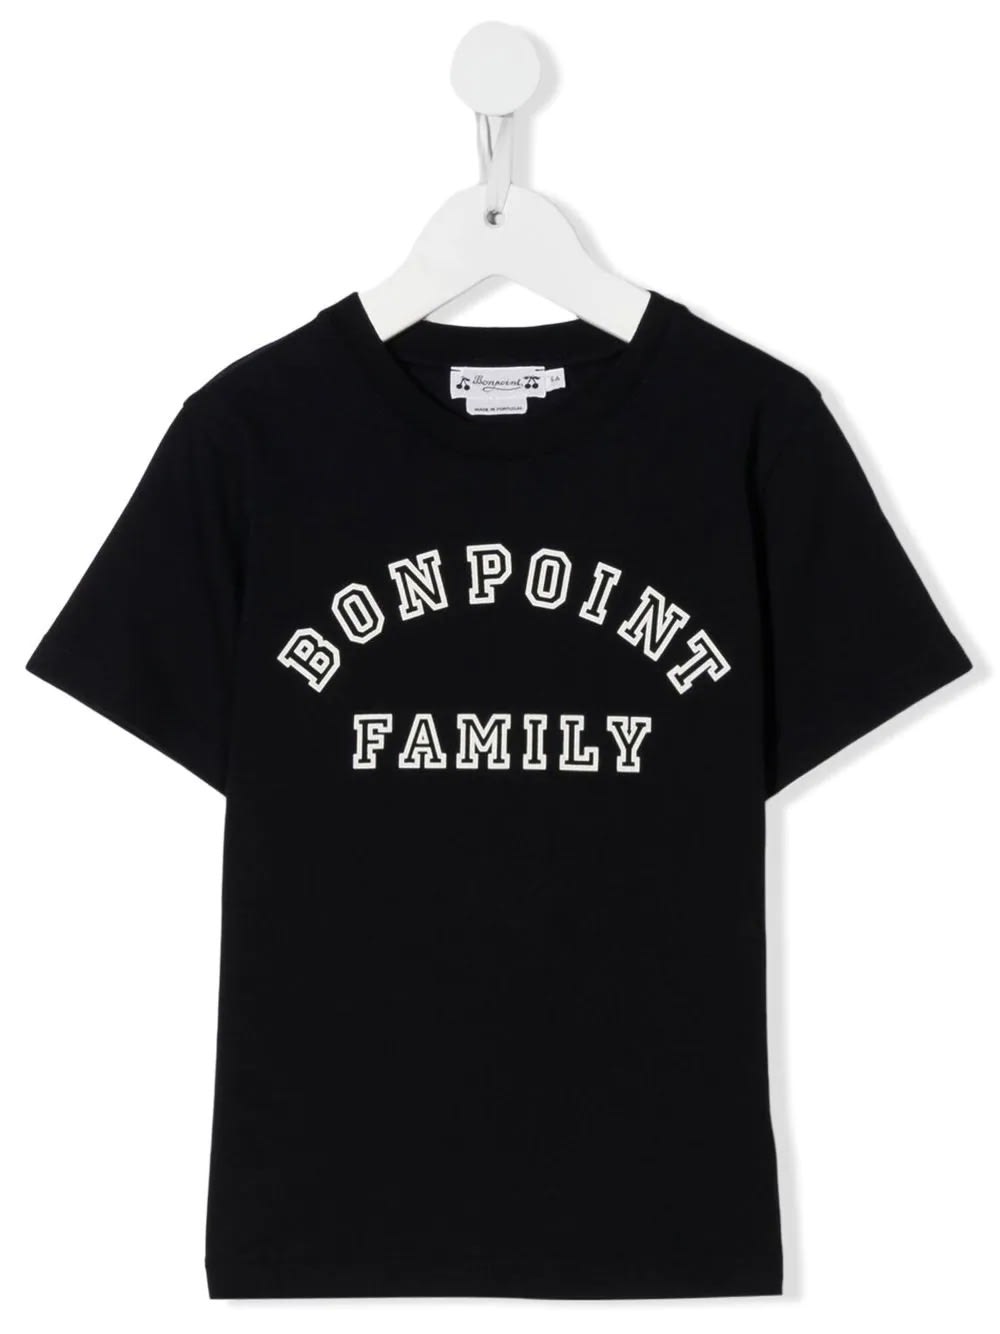 Kids Navy Blue bonpoint Family T-shirt